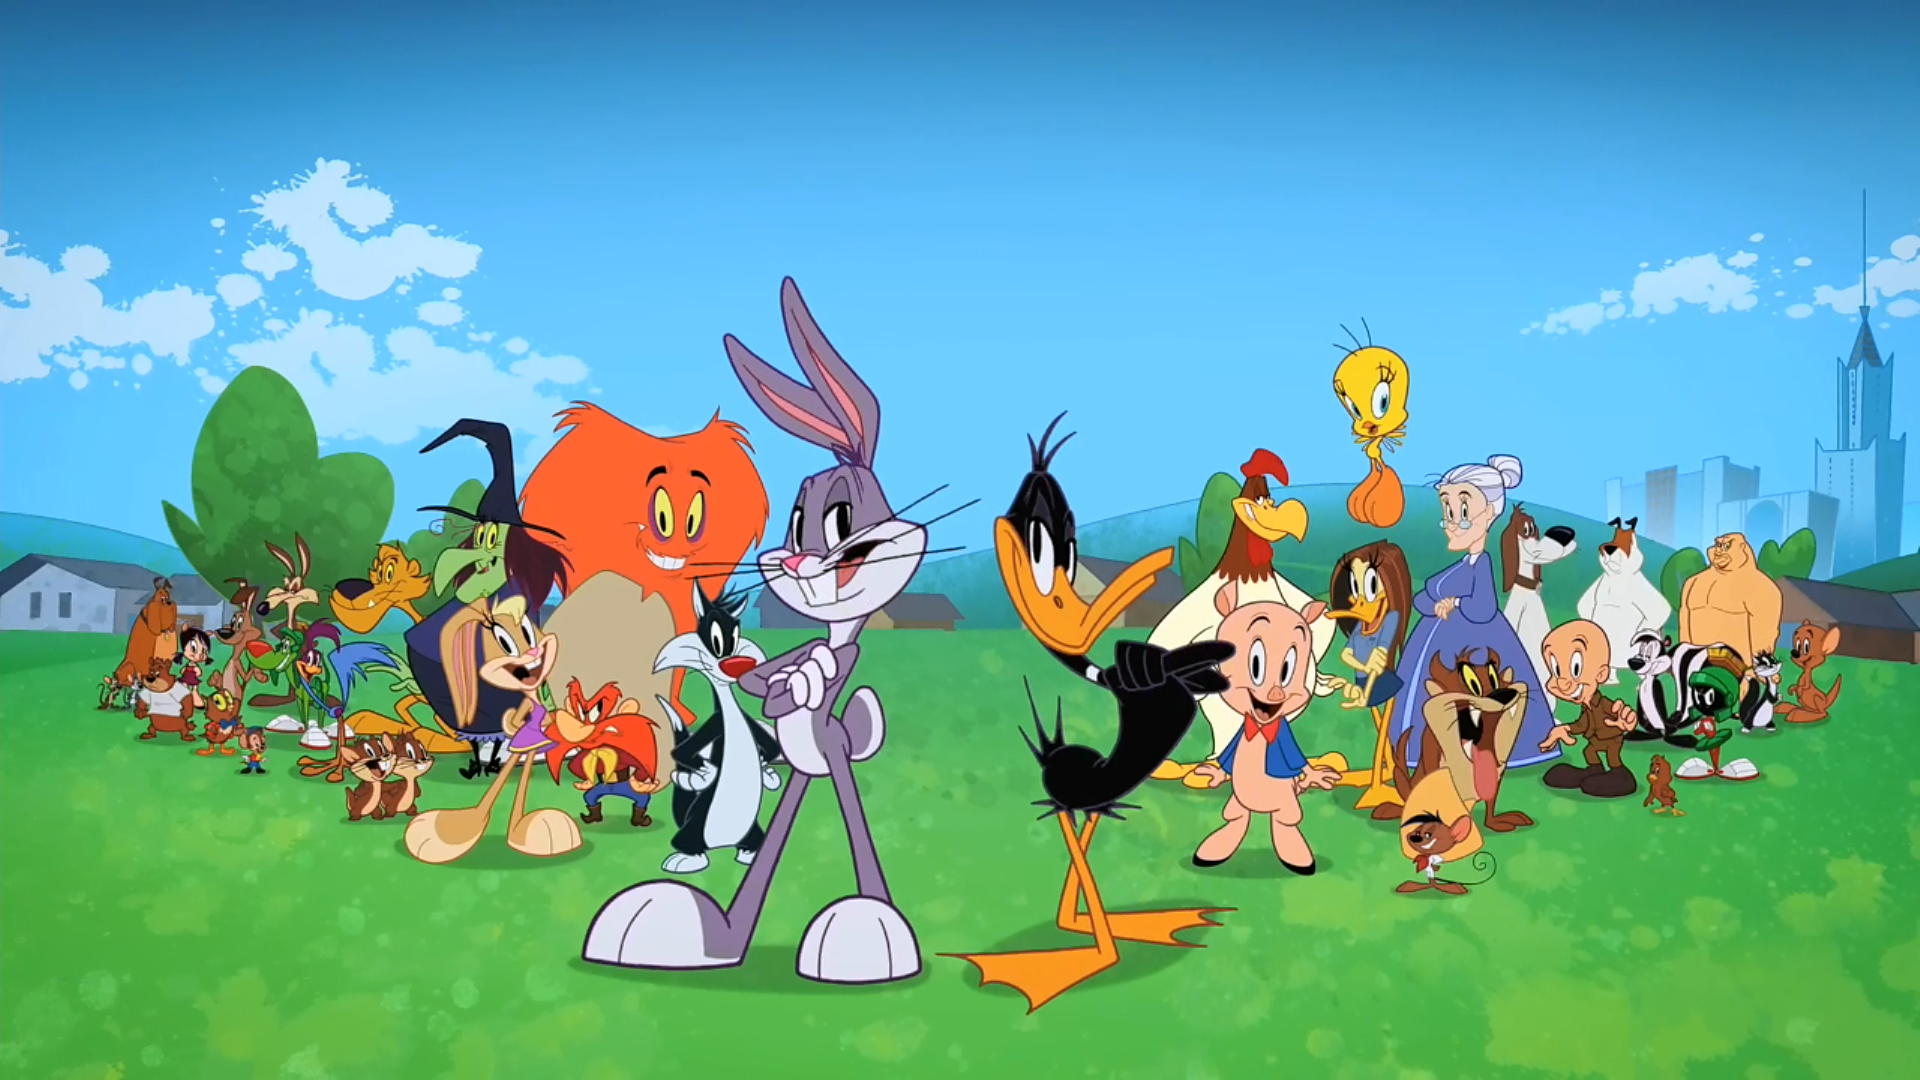 Looney Tunes Wallpaper Image For iPad Air Cartoons